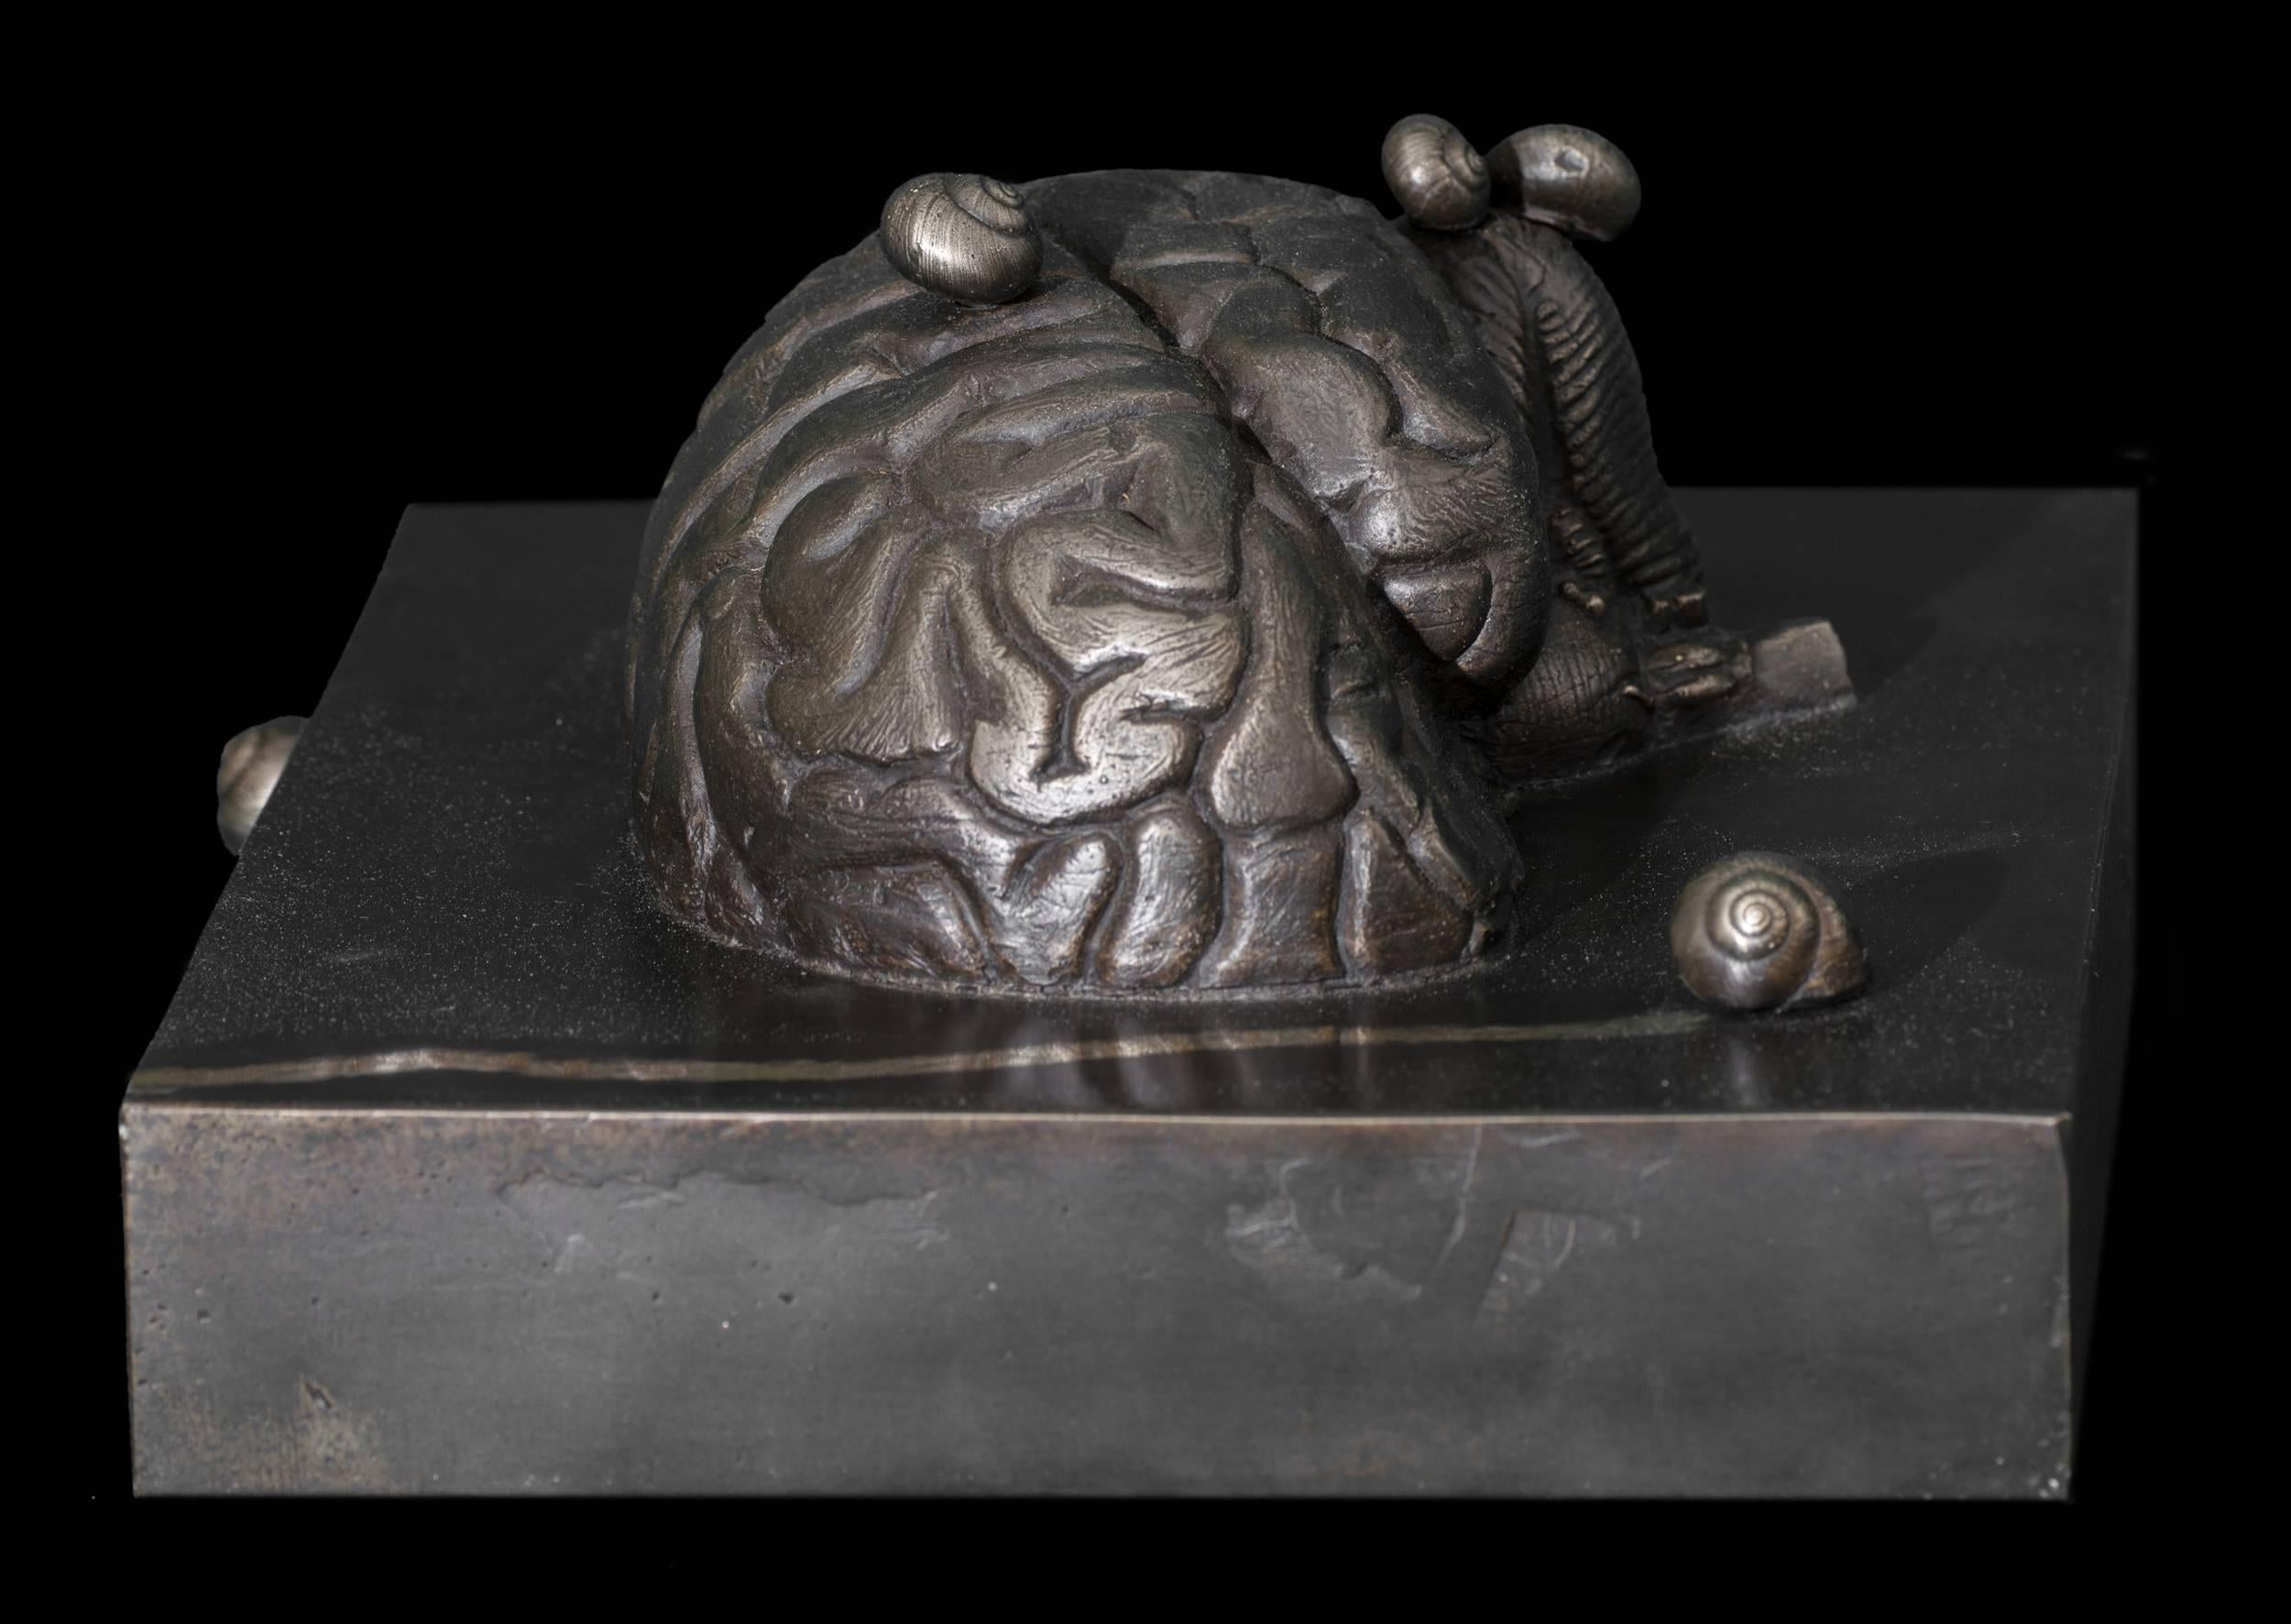 Piano Piano, cast bronze skull sculpture - Contemporary Sculpture by Marcus Jones